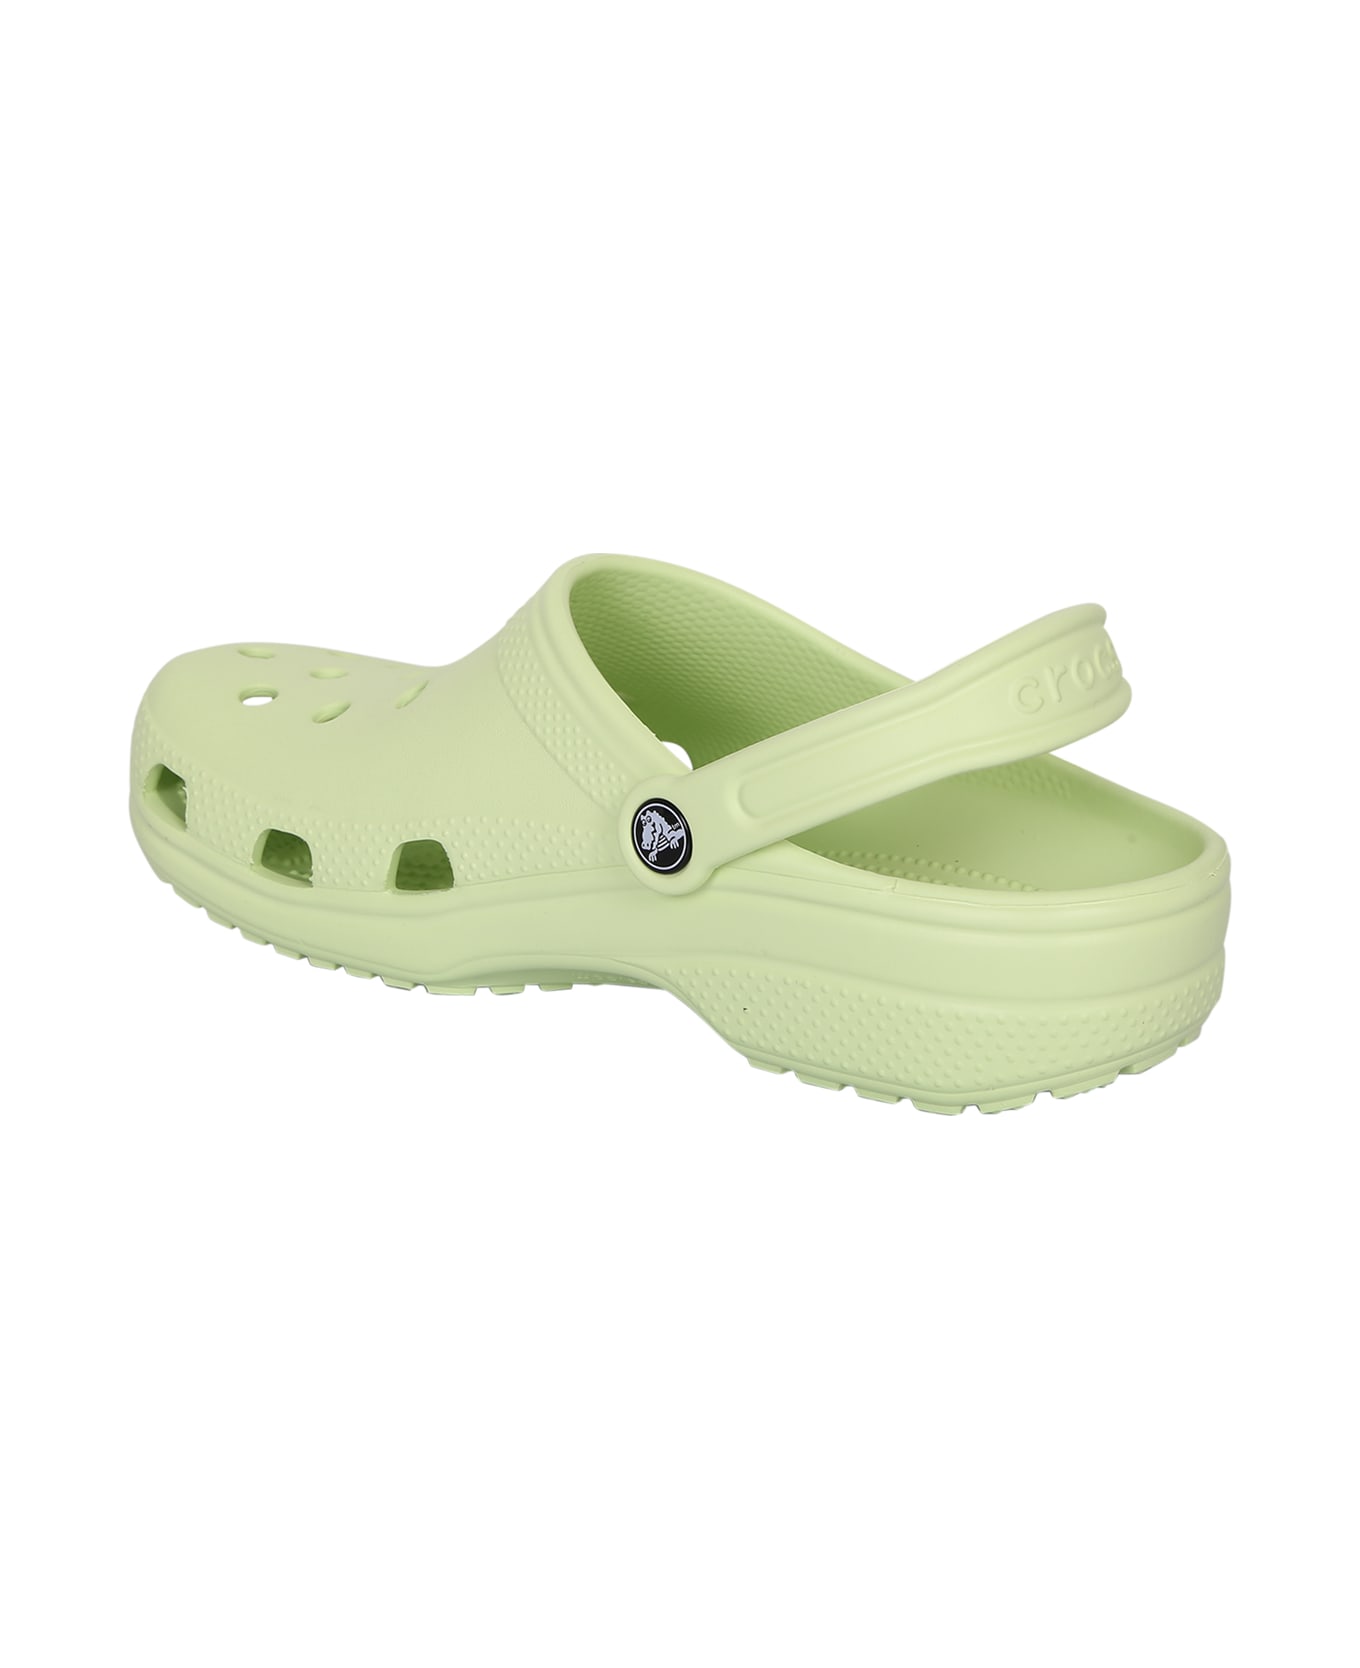 Crocs Cayman Clogs - Green